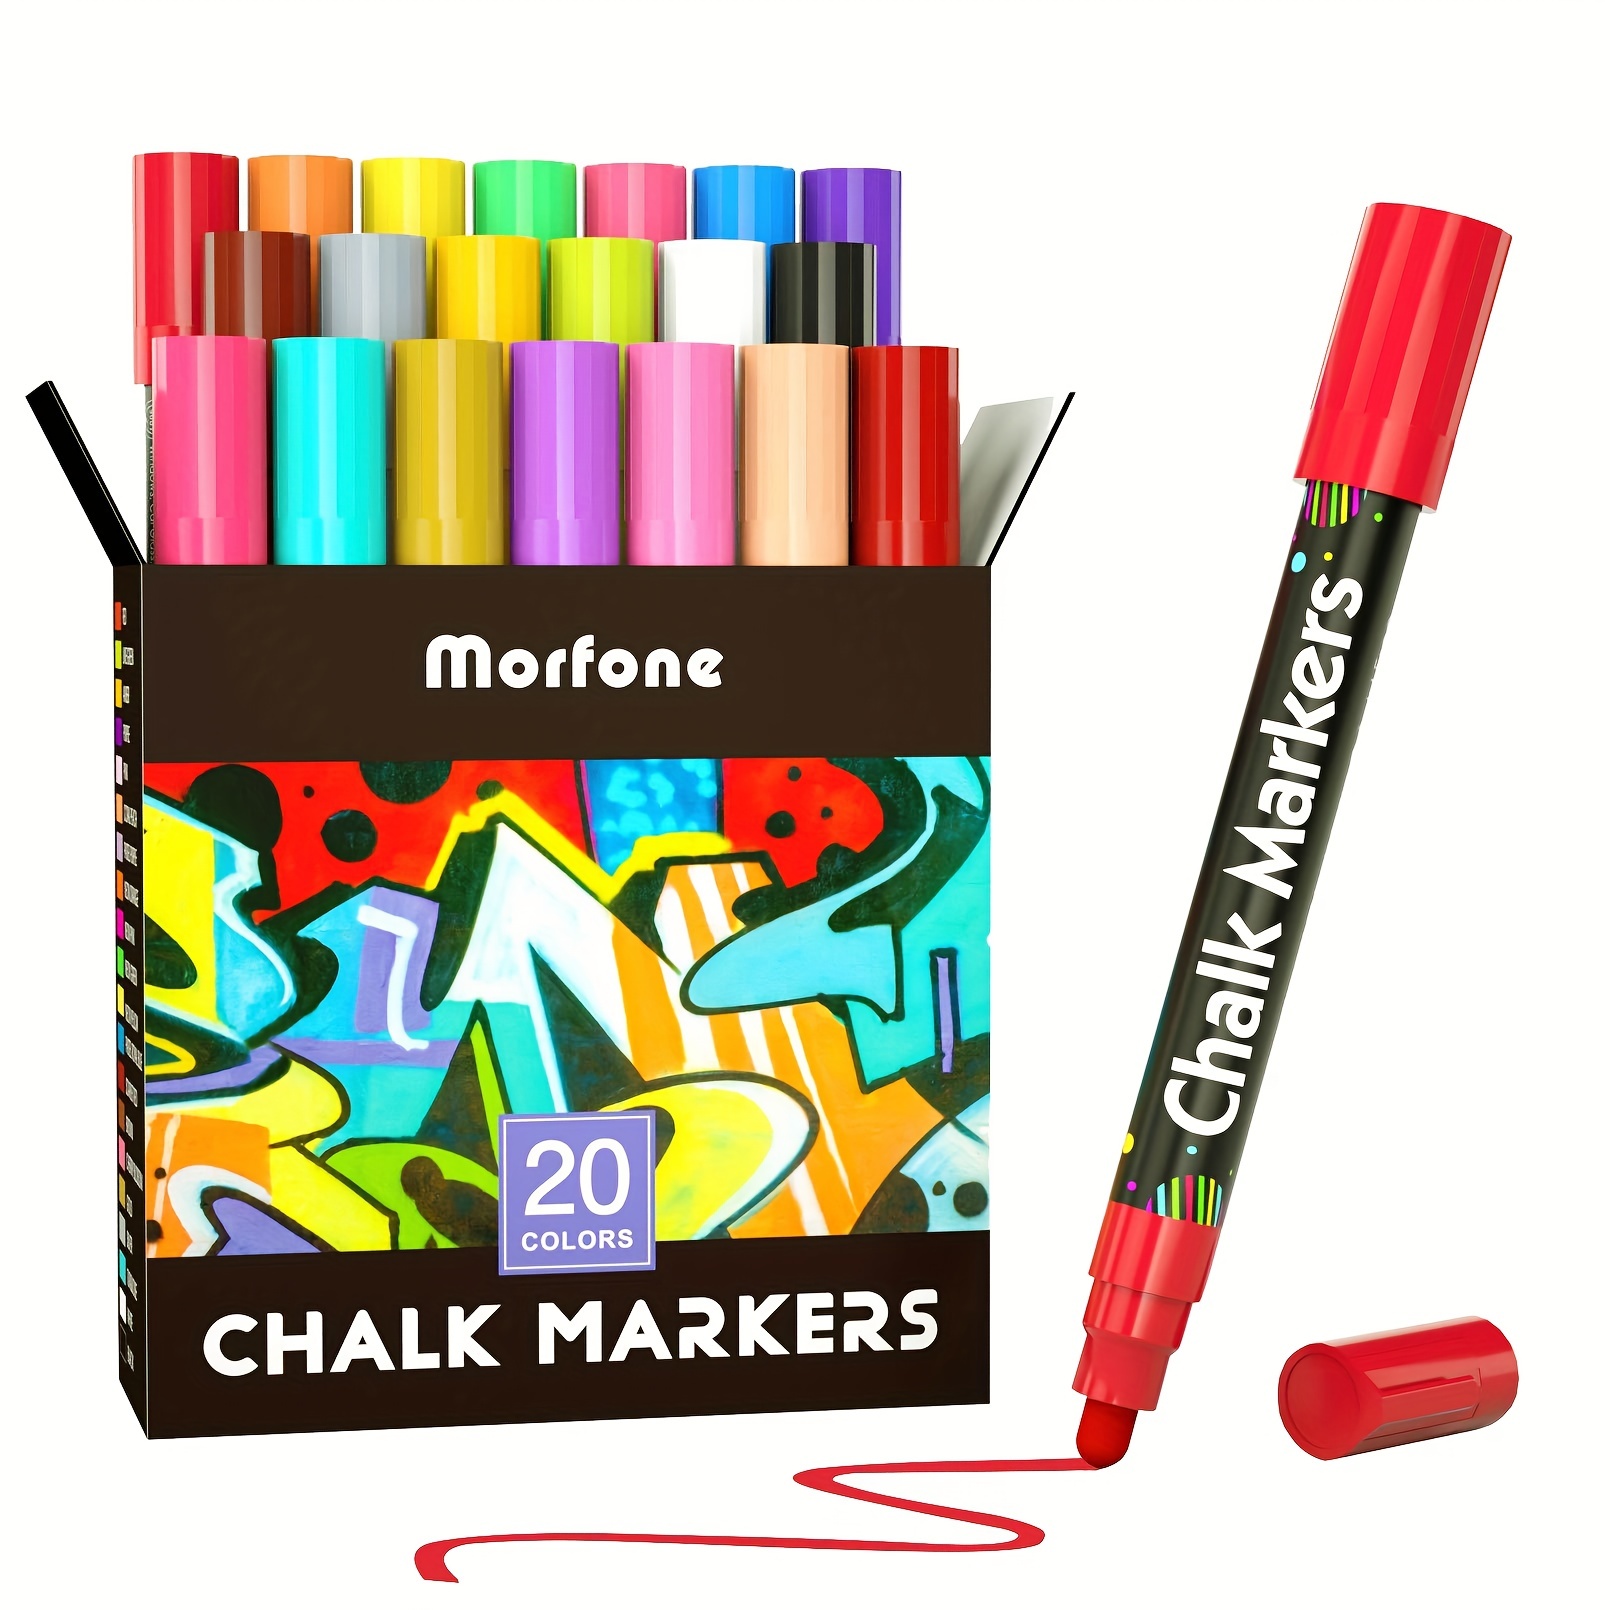 ONUPGO 12 Colors Liquid Chalk Markers Pens for Blackboard, Chalkboard Signs, Glass Window, Graduation Celebration School Kids Art - Washable Chalk